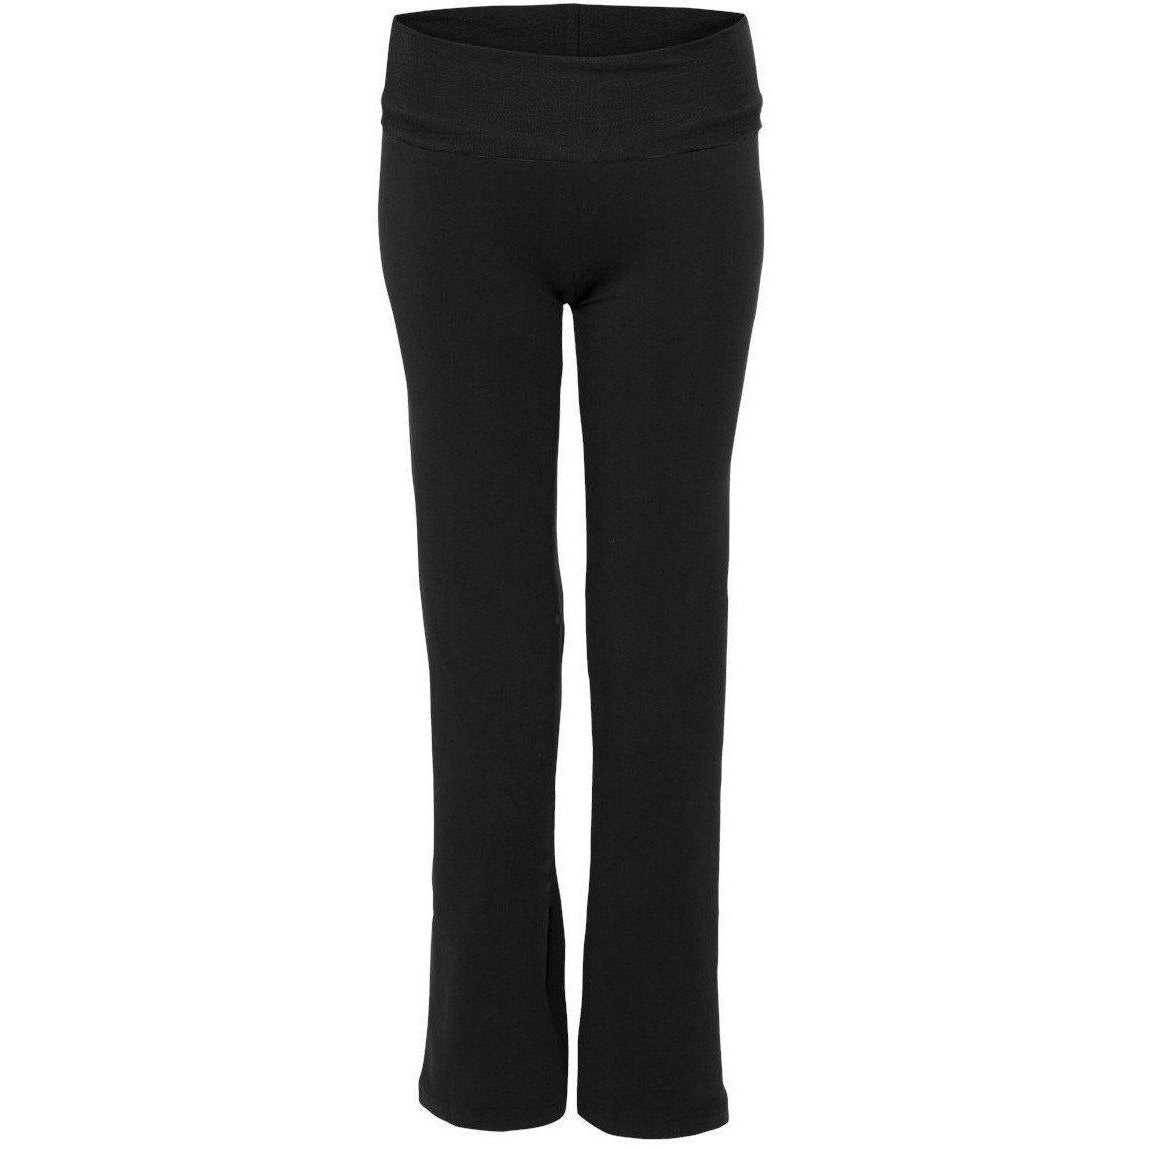 Womens Cotton/Spandex Fitness Pants